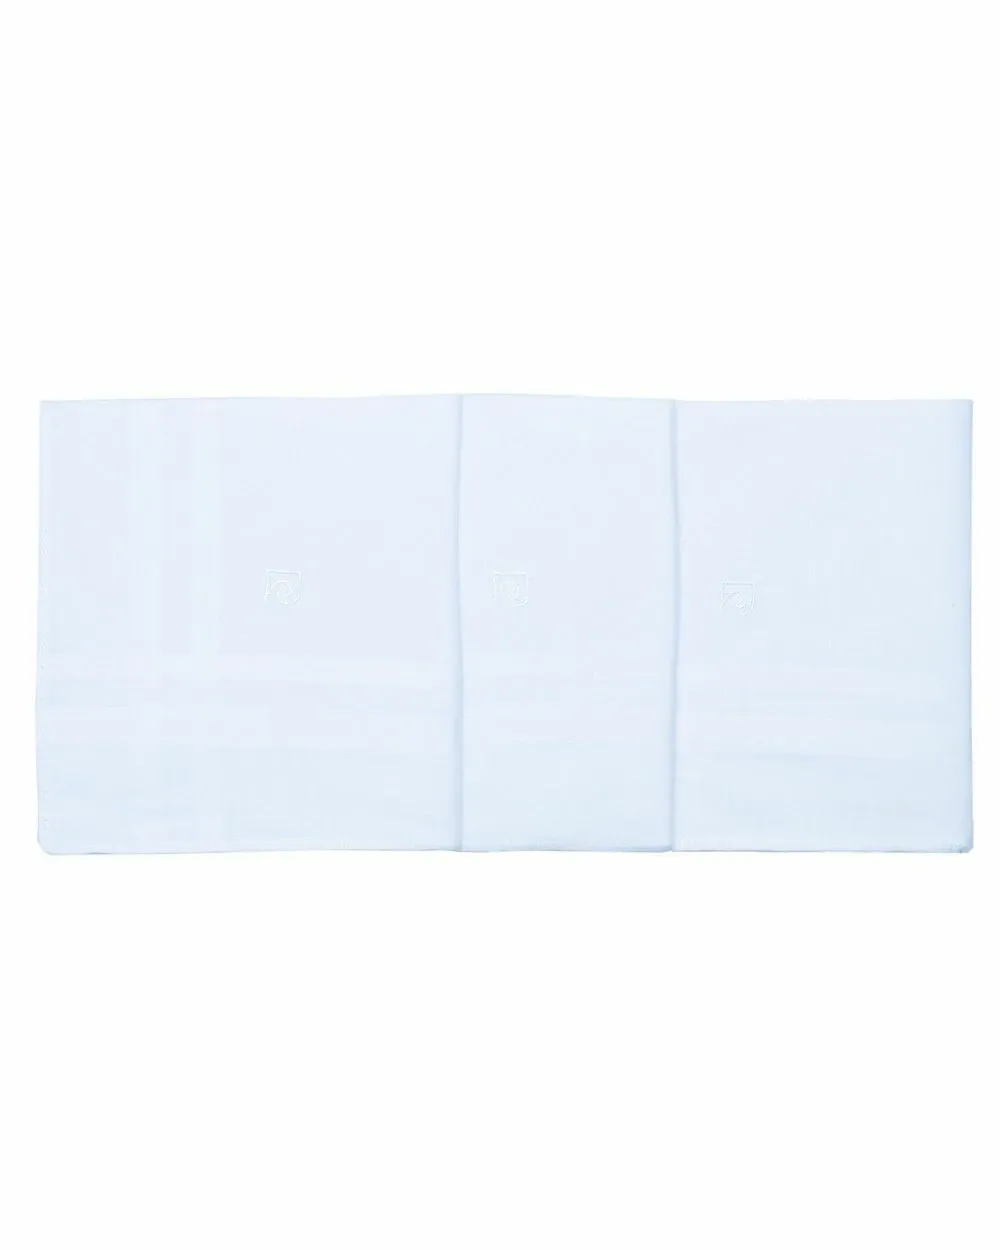 Set de 3 pañuelos blancos